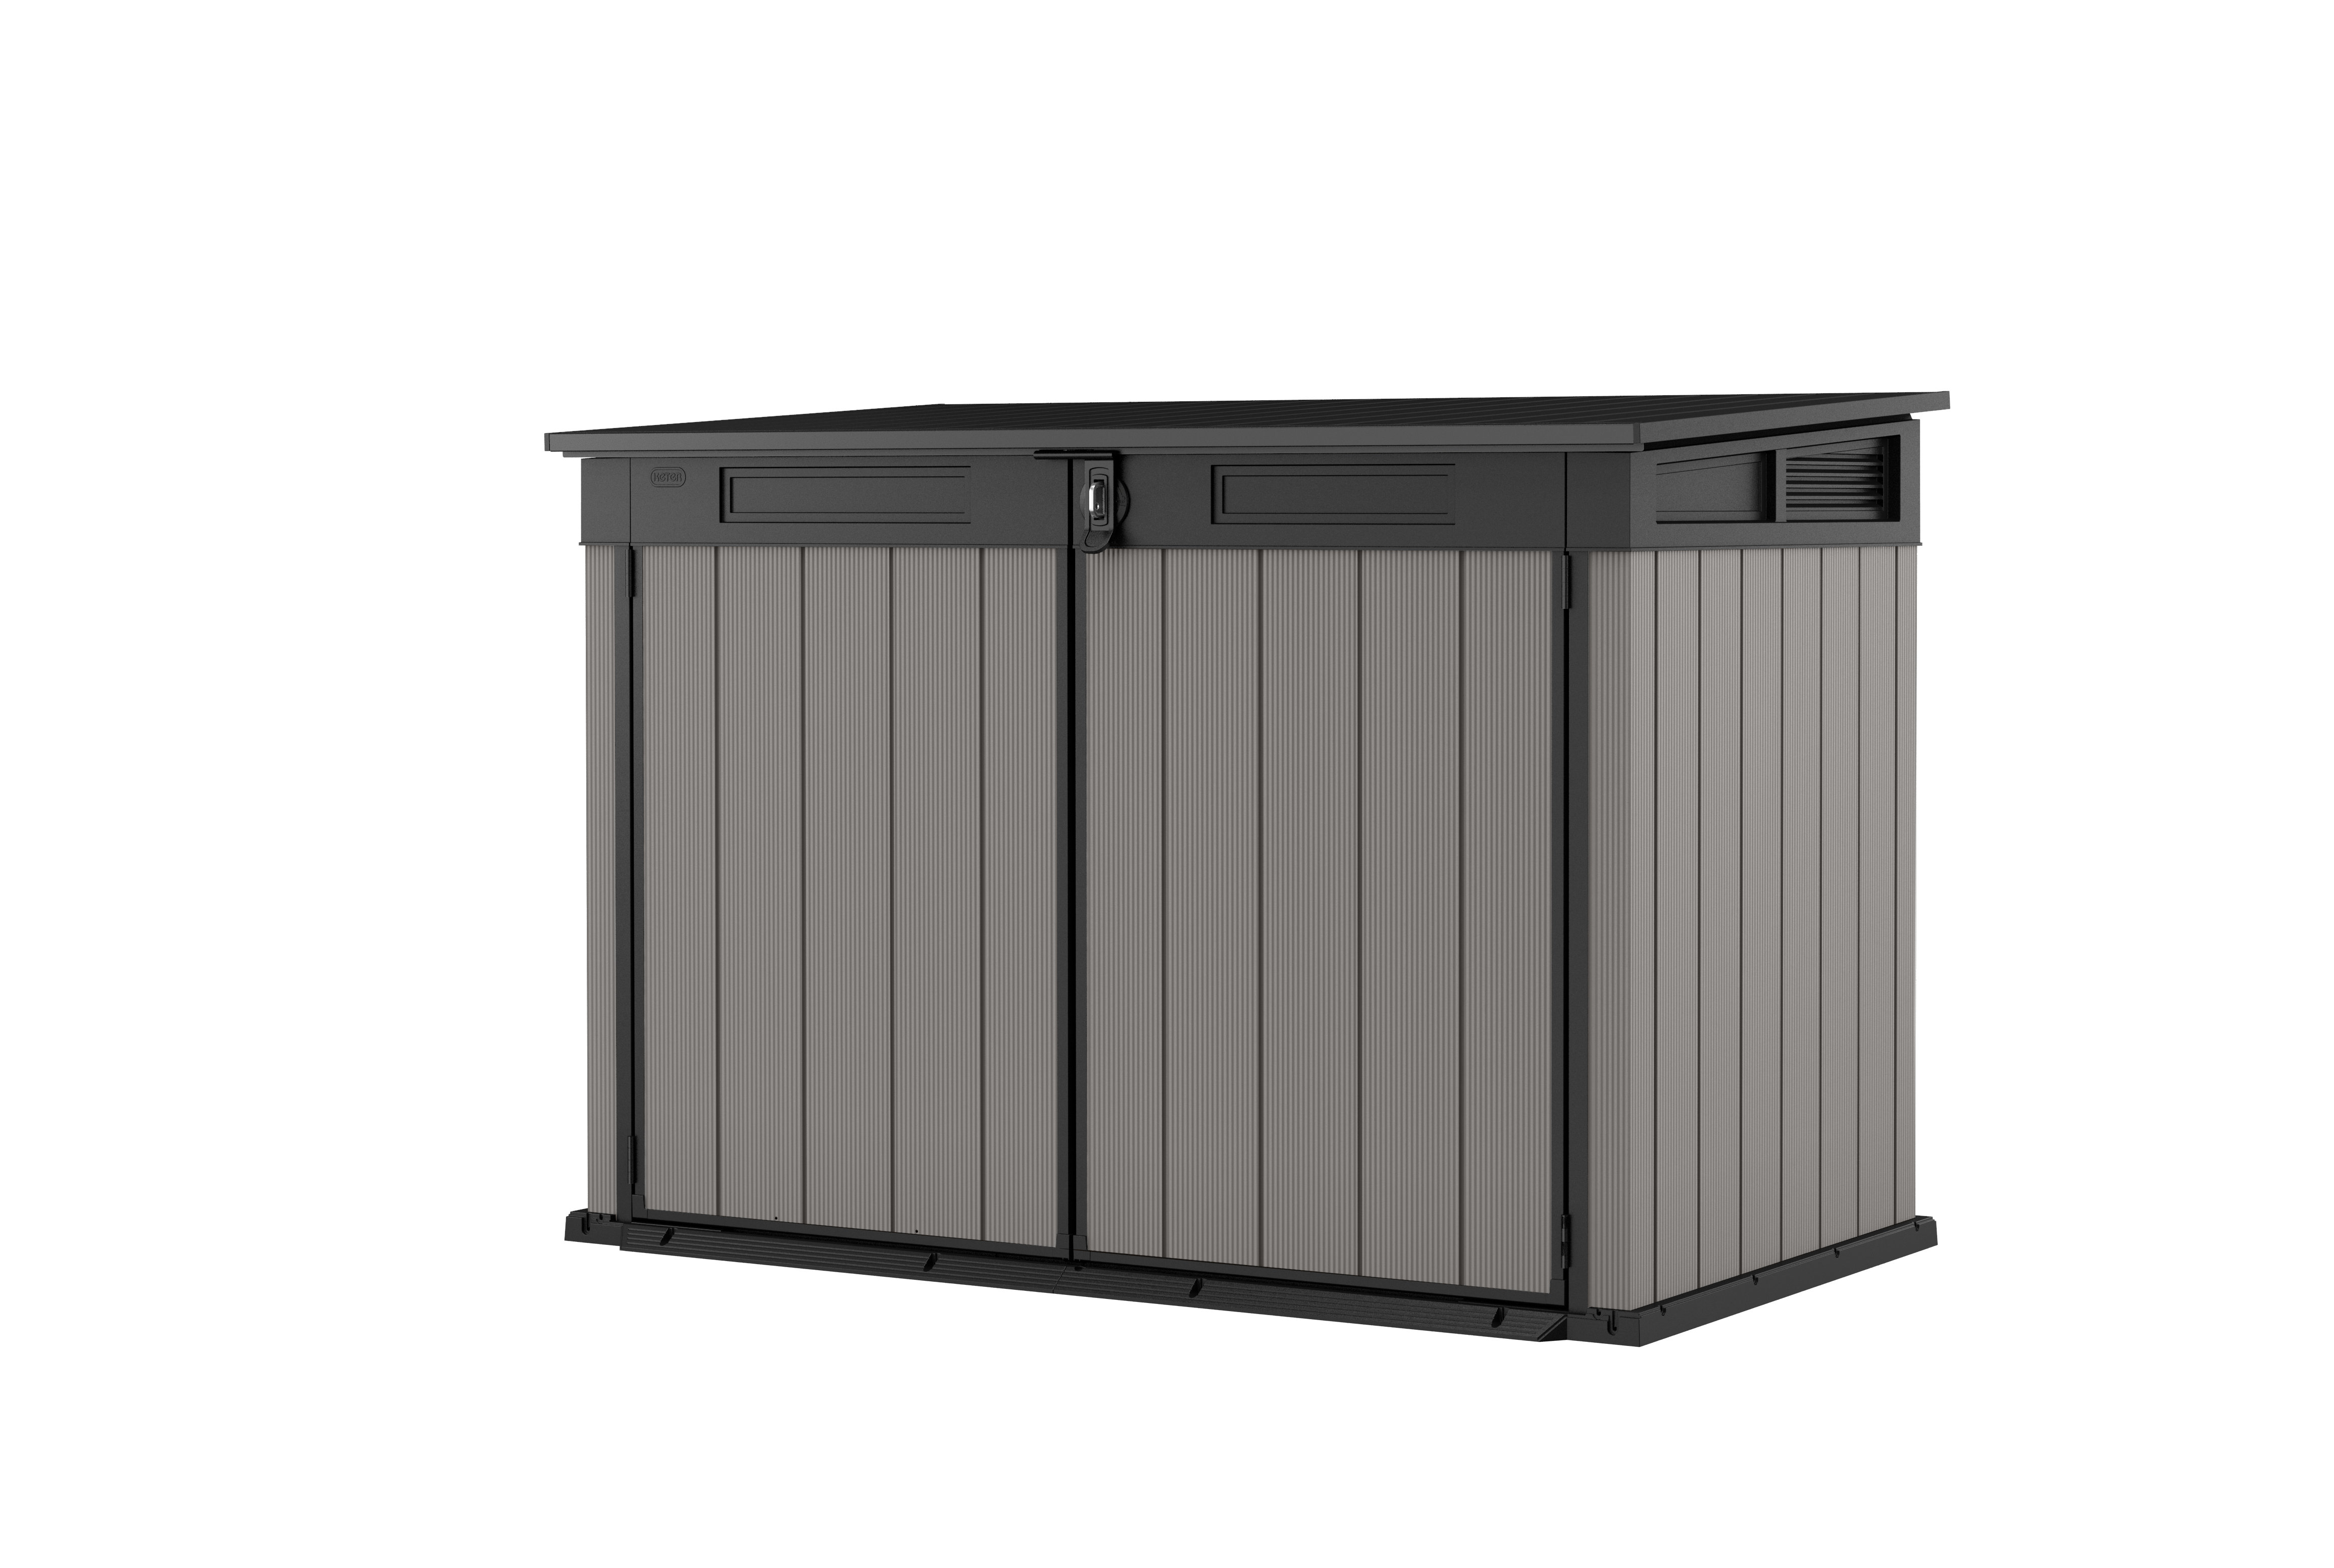 Keter Premier Jumbo Horizontal Durable Resin Outdoor Storage Shed